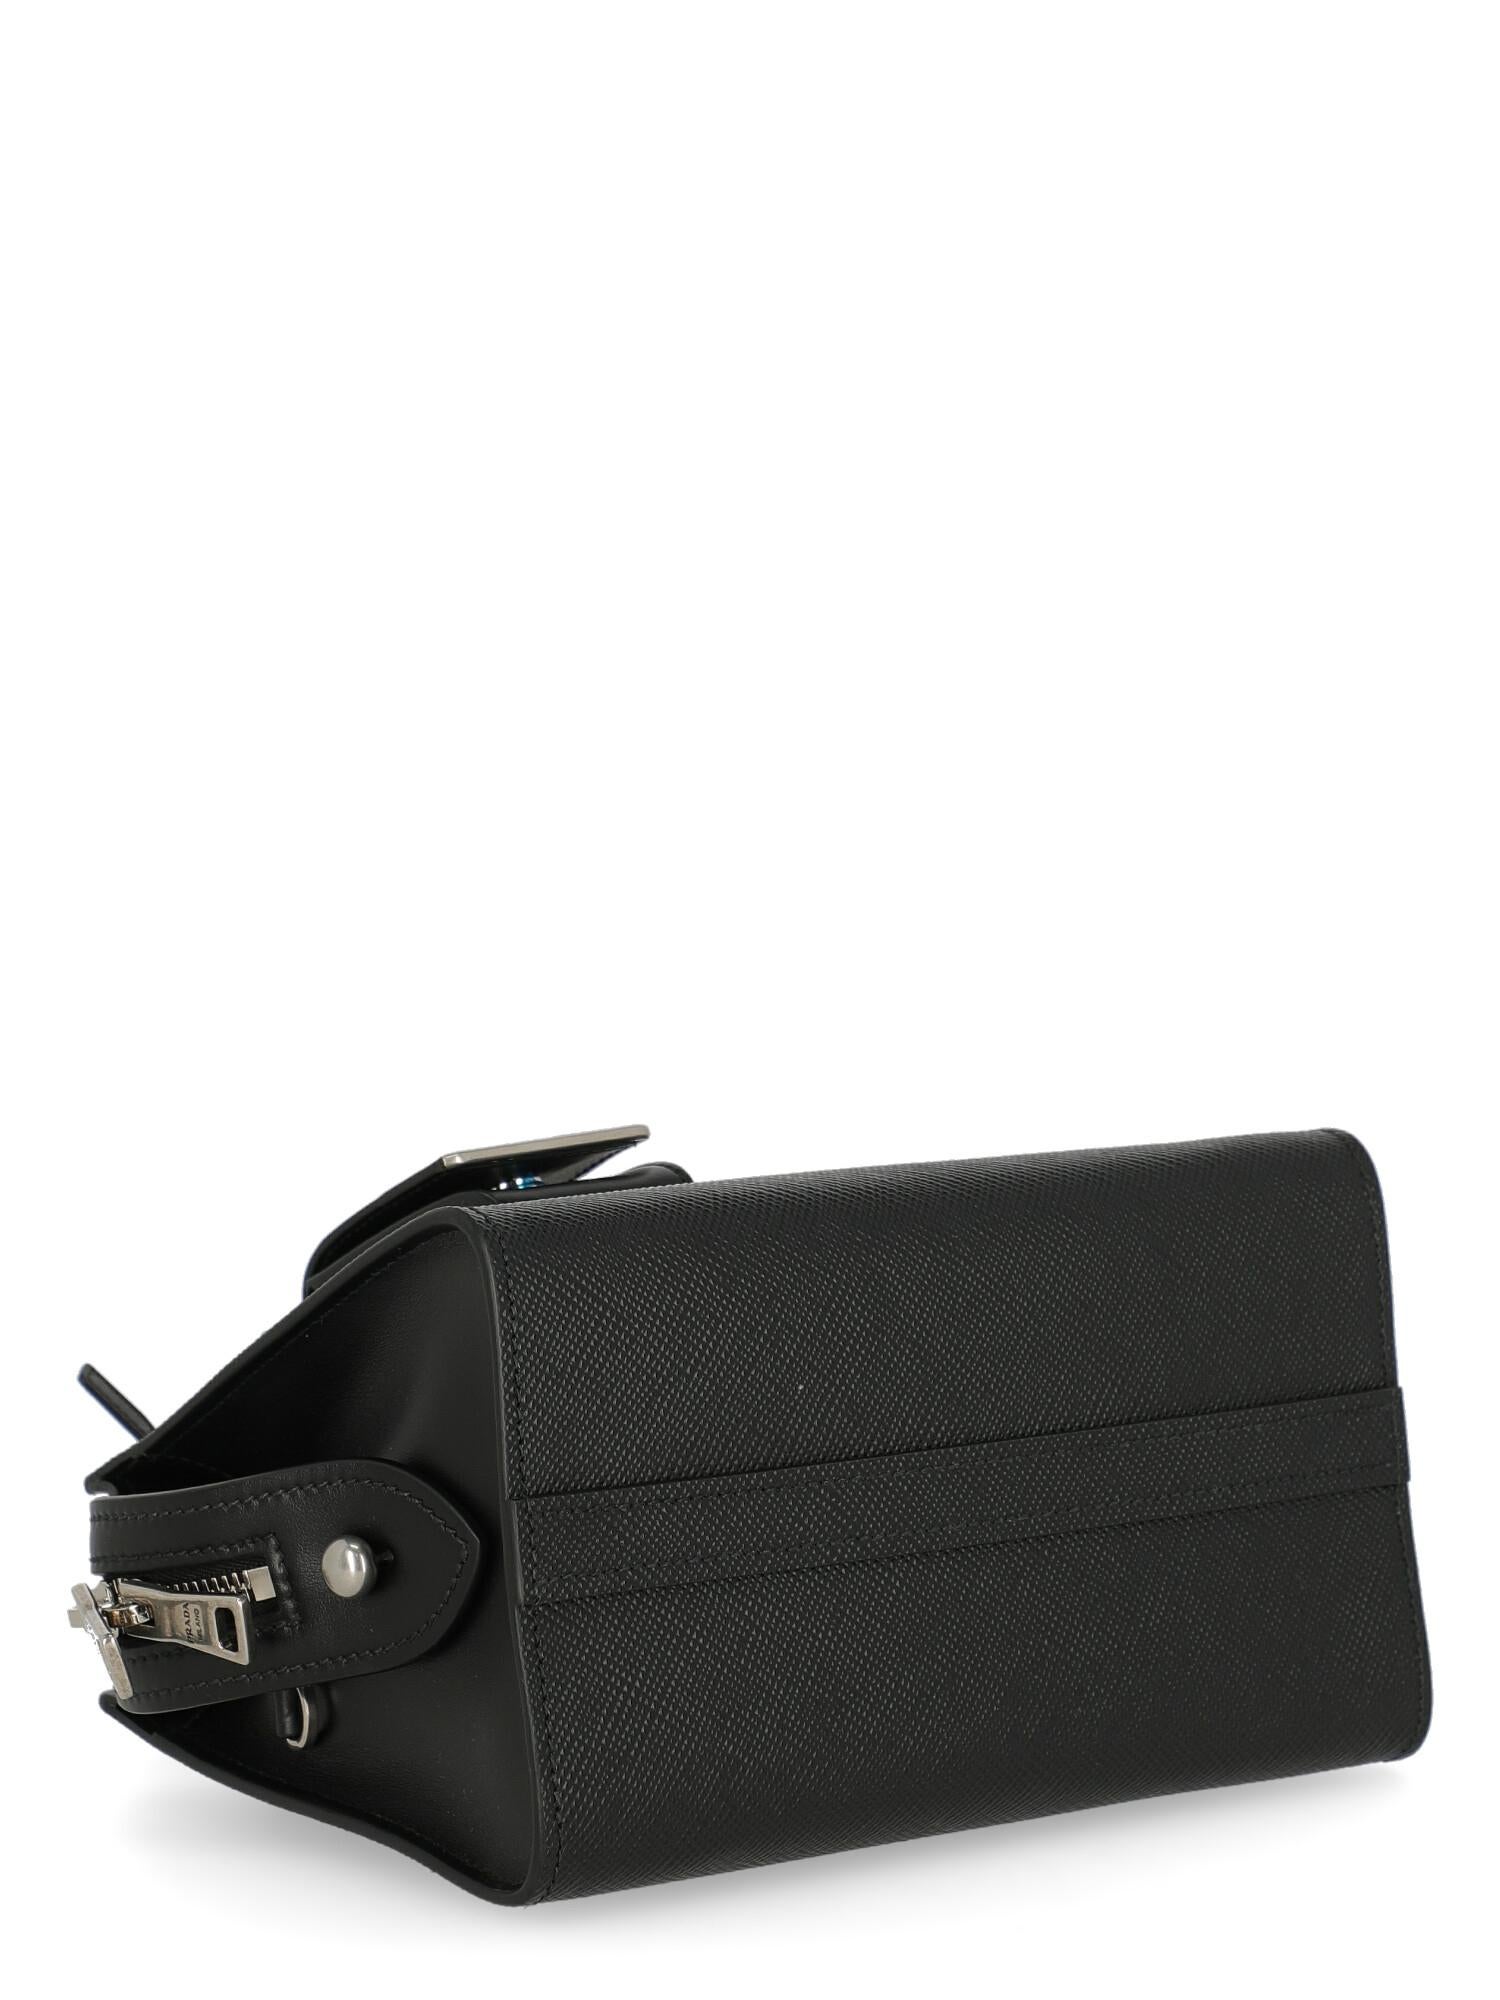 Prada  Women   Handbags  Black Leather  For Sale 1